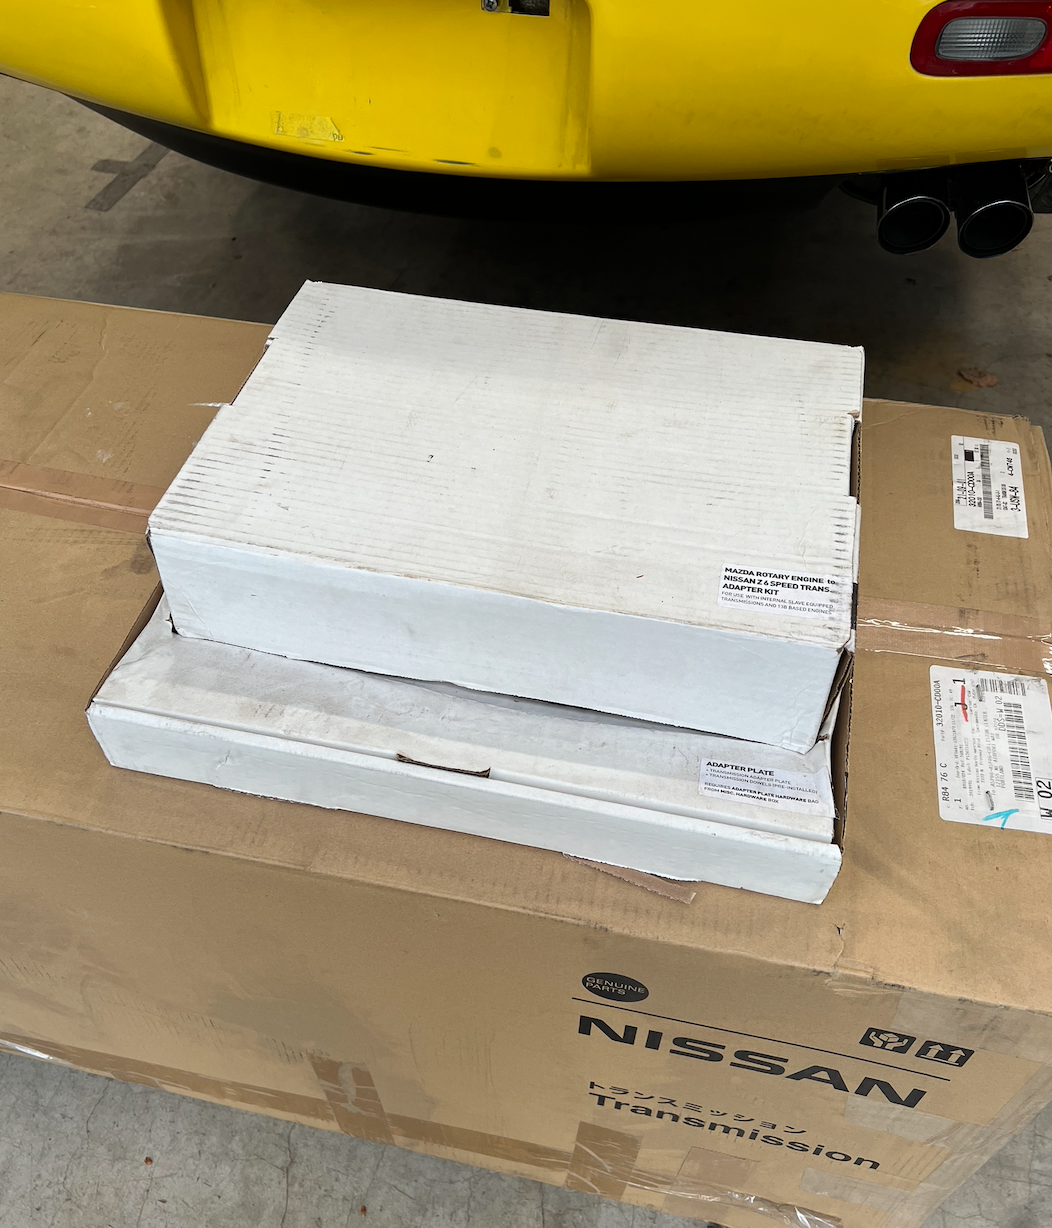 Drivetrain - Nissan CD009 Transmission and 13B/20B Adaptor set - New - 0  All Models - Portland, OR 97204, United States